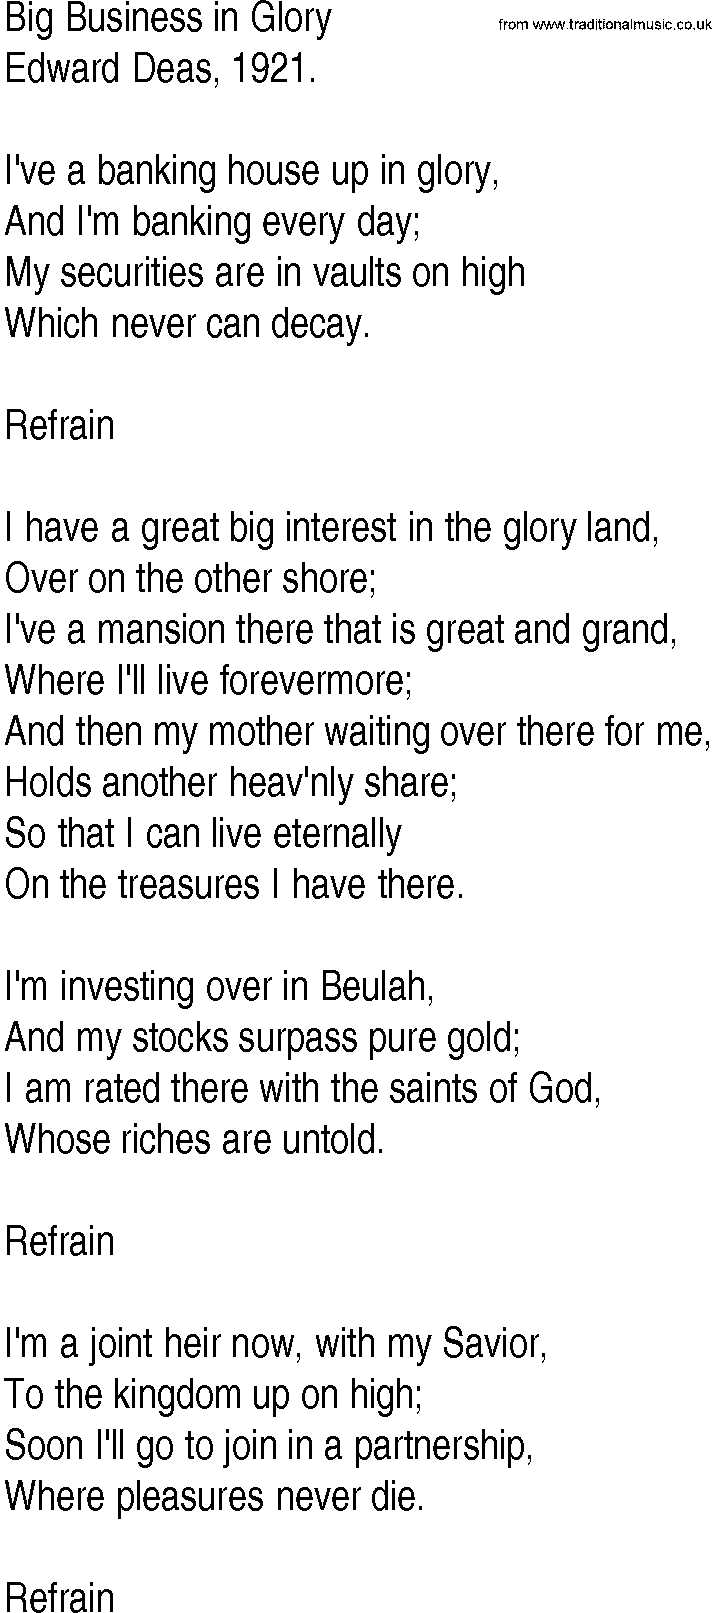 Hymn and Gospel Song: Big Business in Glory by Edward Deas lyrics